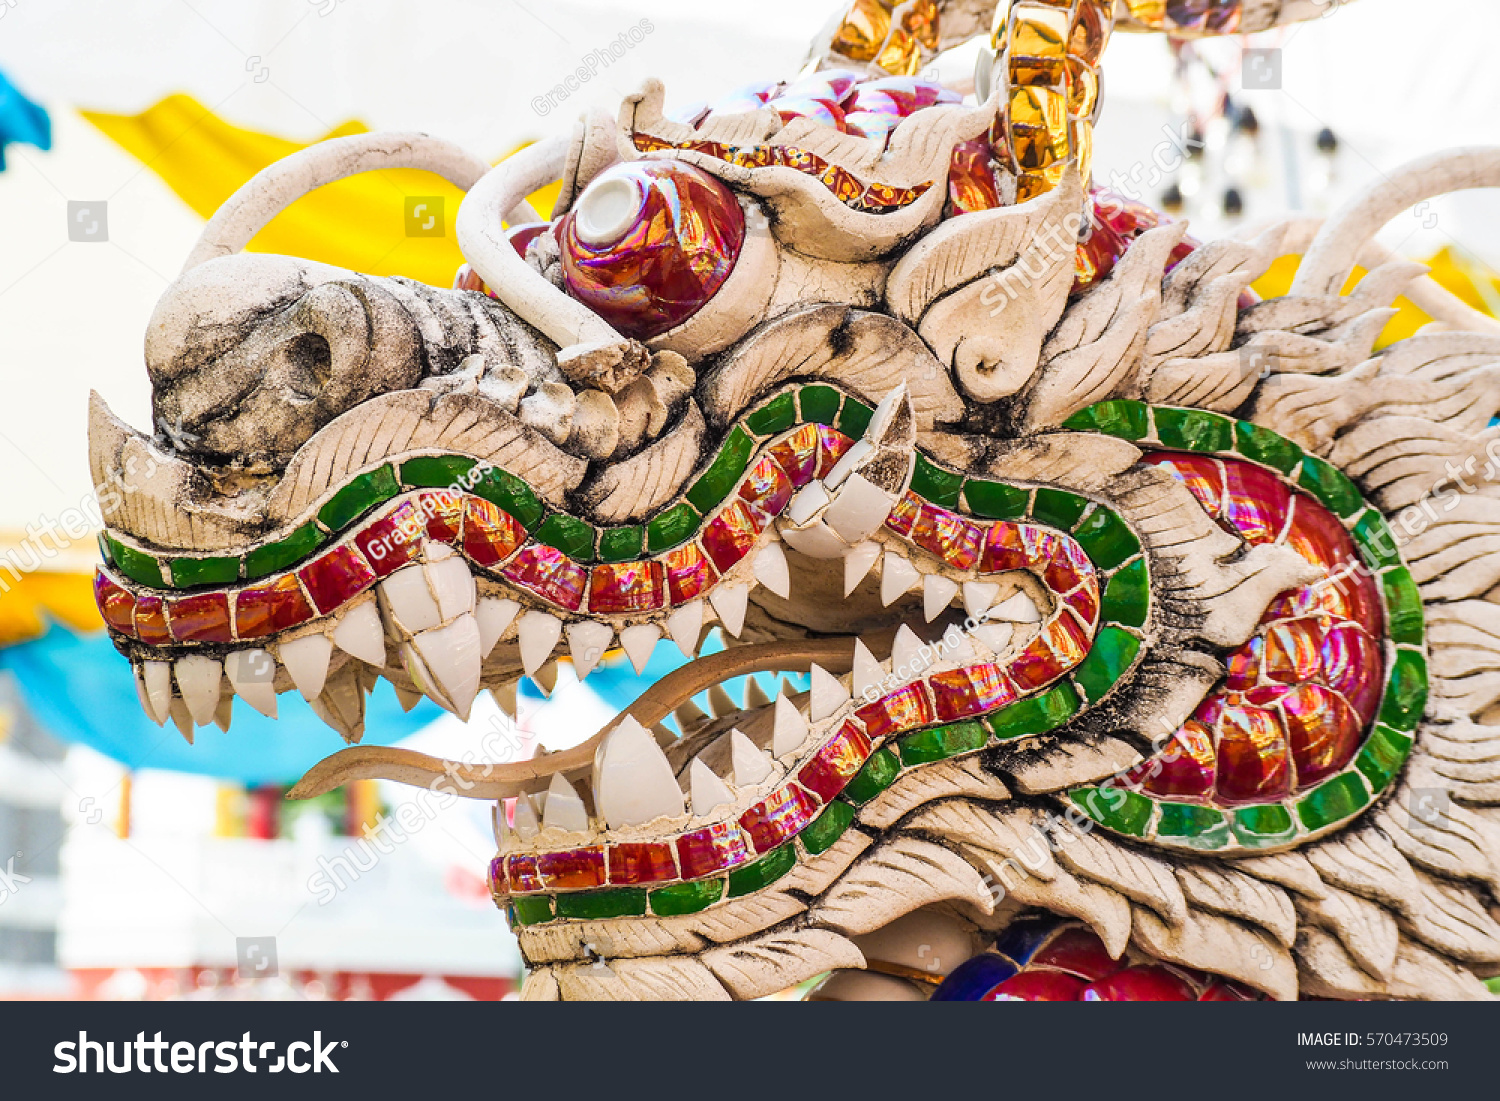 Naga Holy Animal Buddhist Legend This Stock Photo 570473509 - Shutterstock